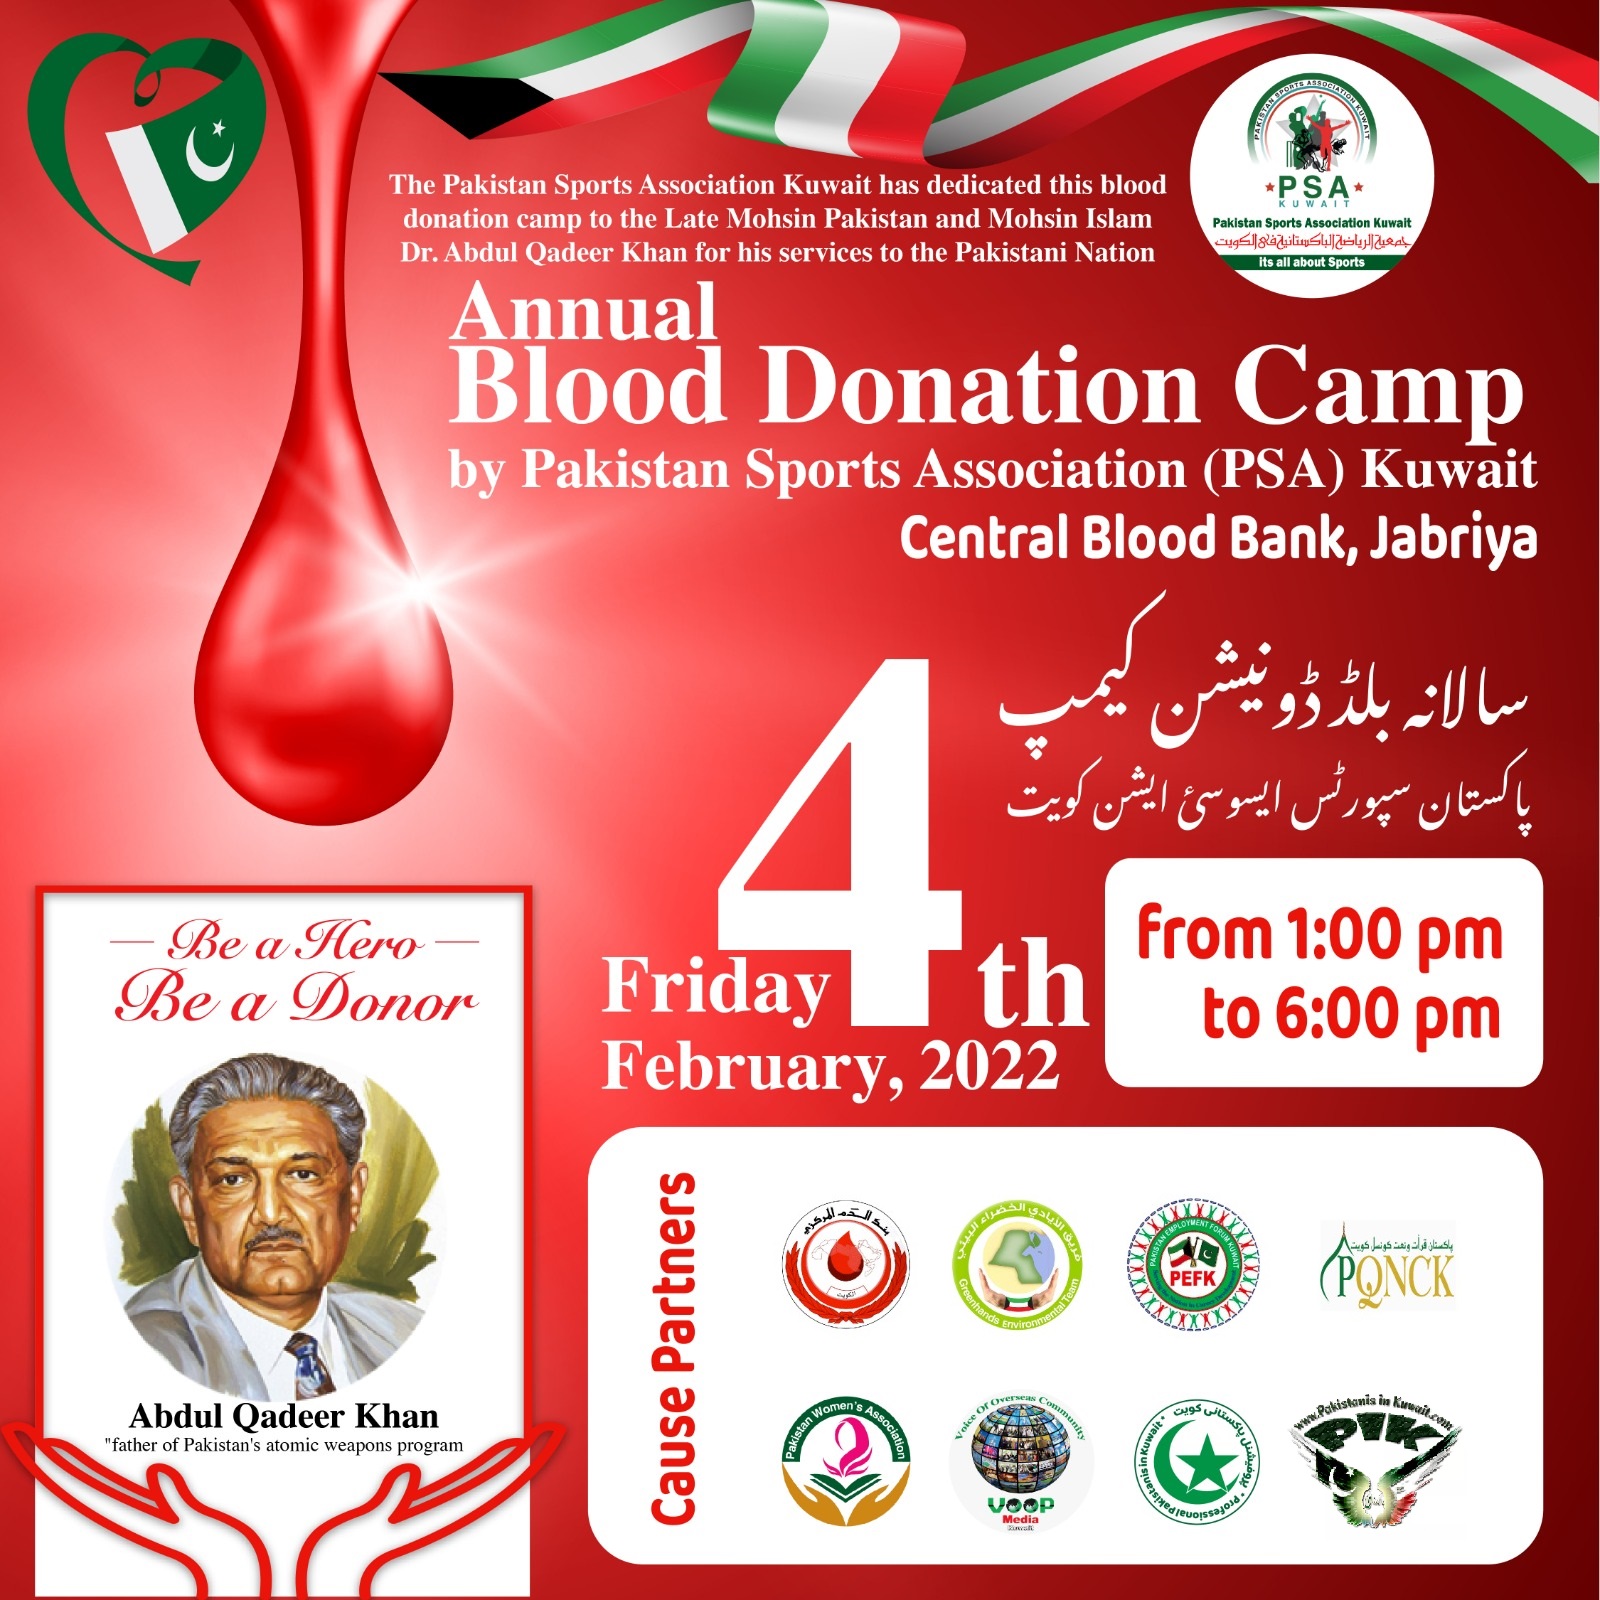 http://pakistanisinkuwait.com/images/psa-blood-donation-4-feb-2022.jpg